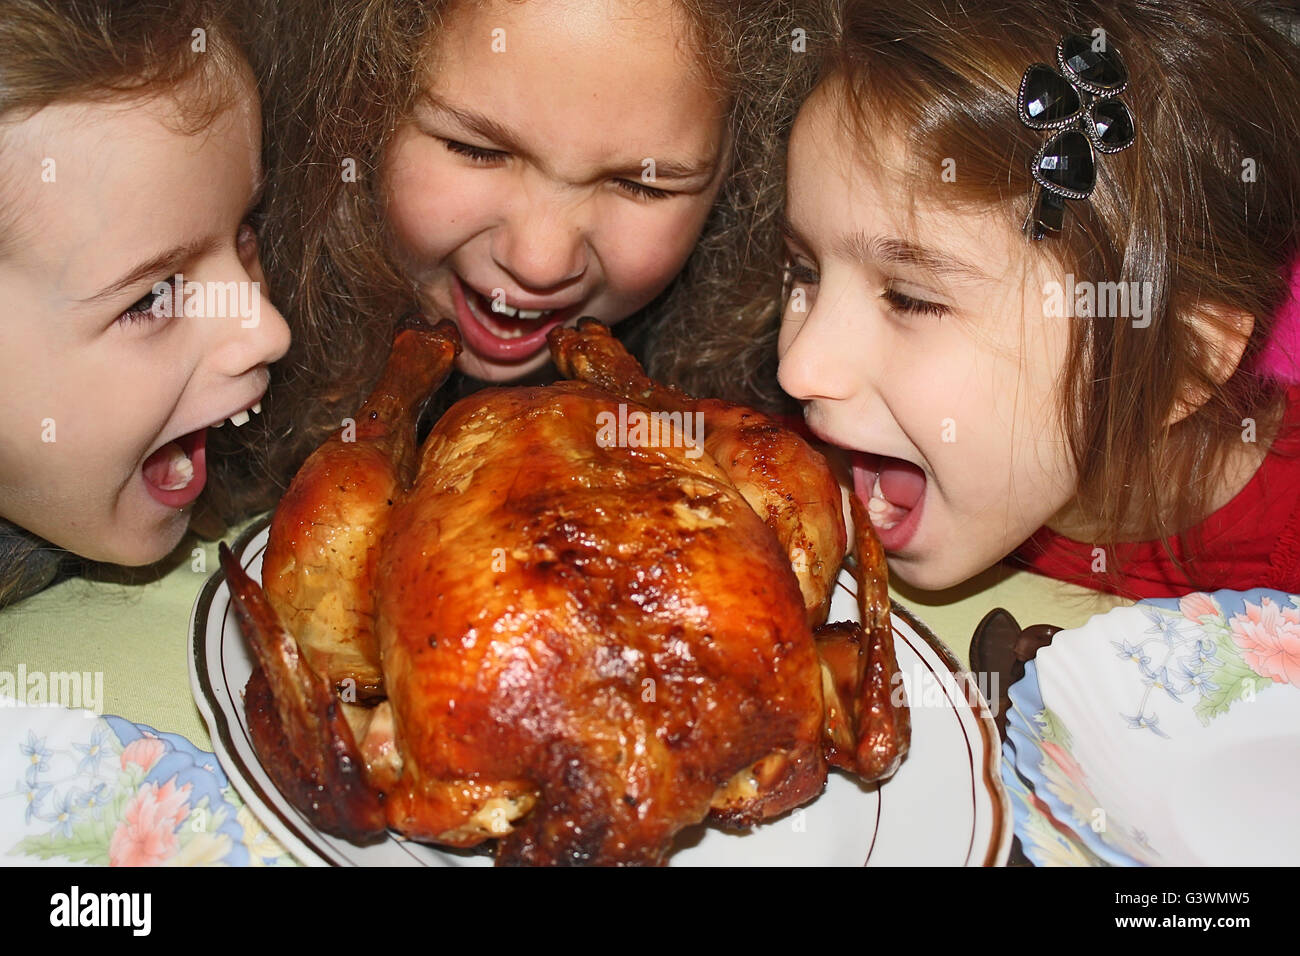 Girls eating roasted chicken Stock Photo - Alamy